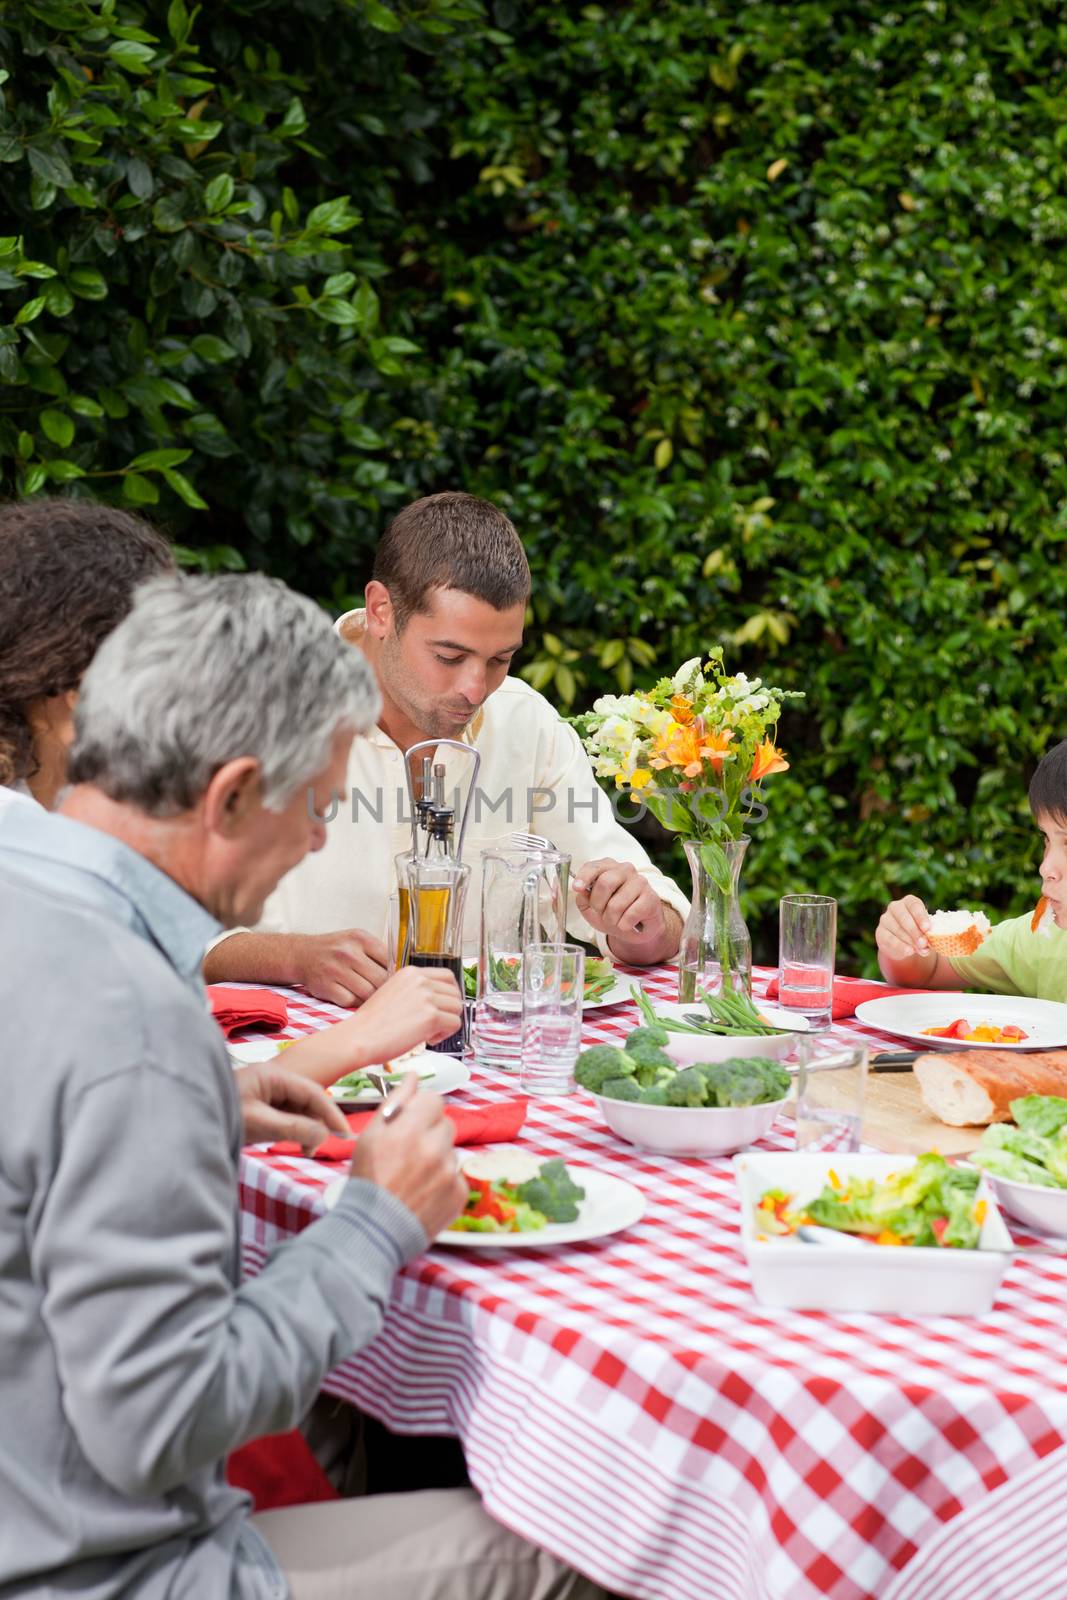 Happy family eating in the garden by Wavebreakmedia